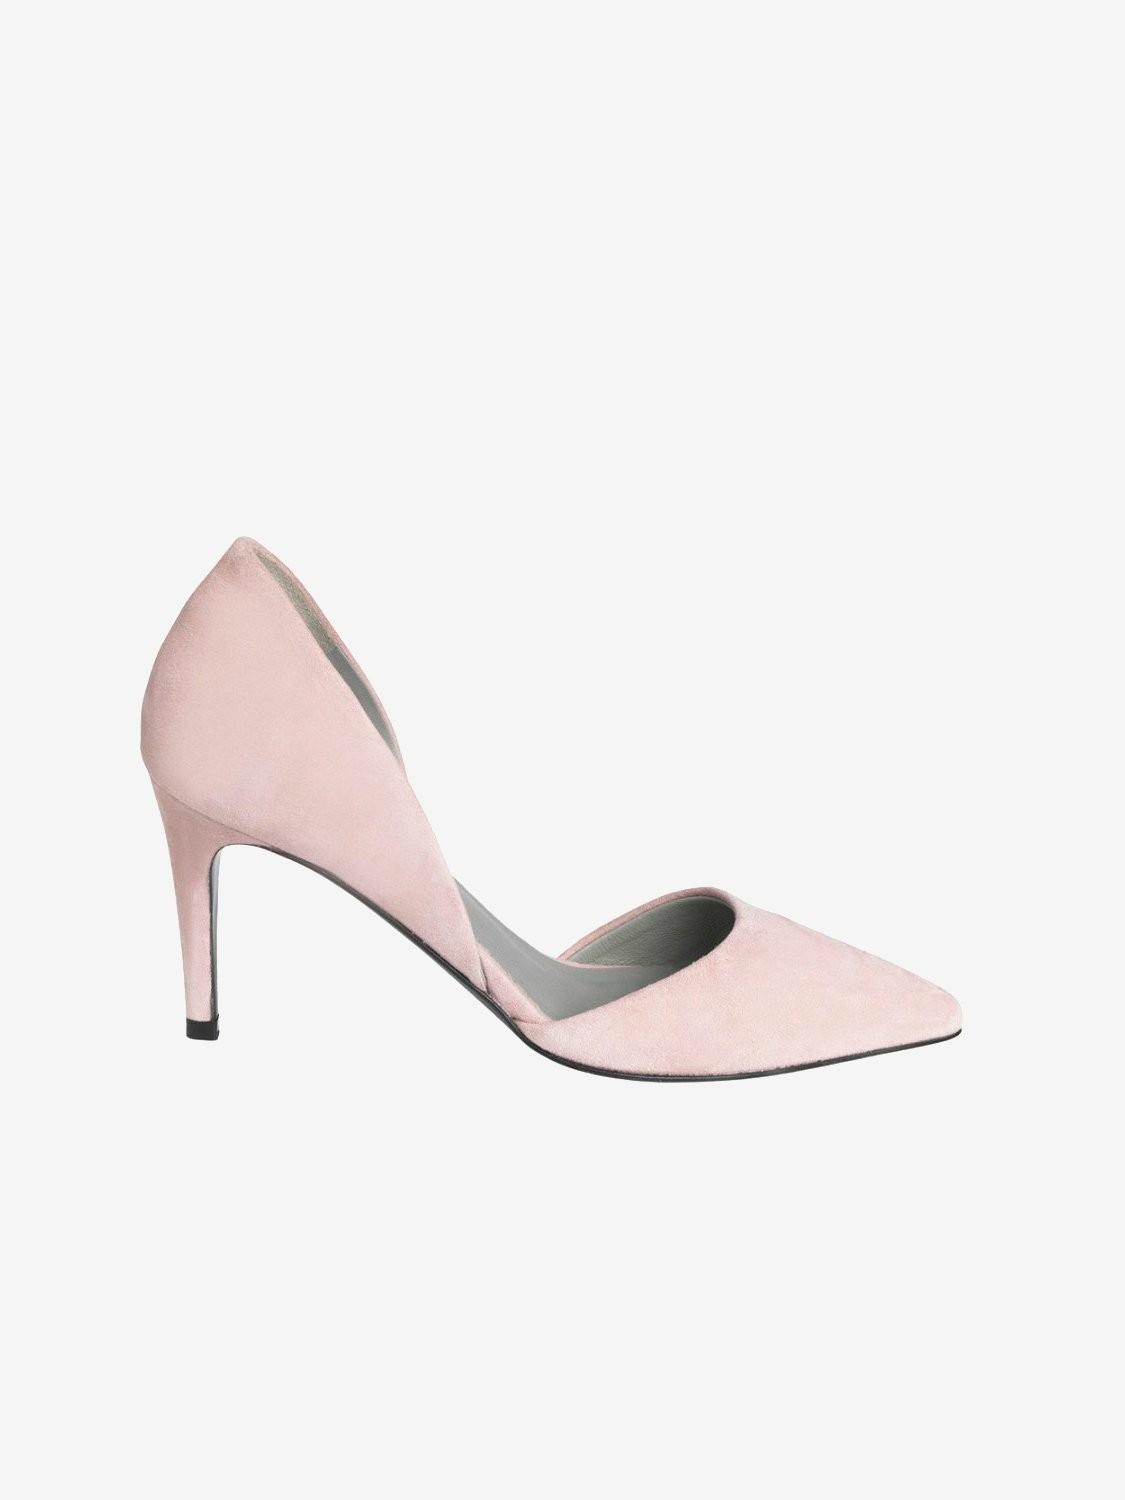 blush pink court shoes